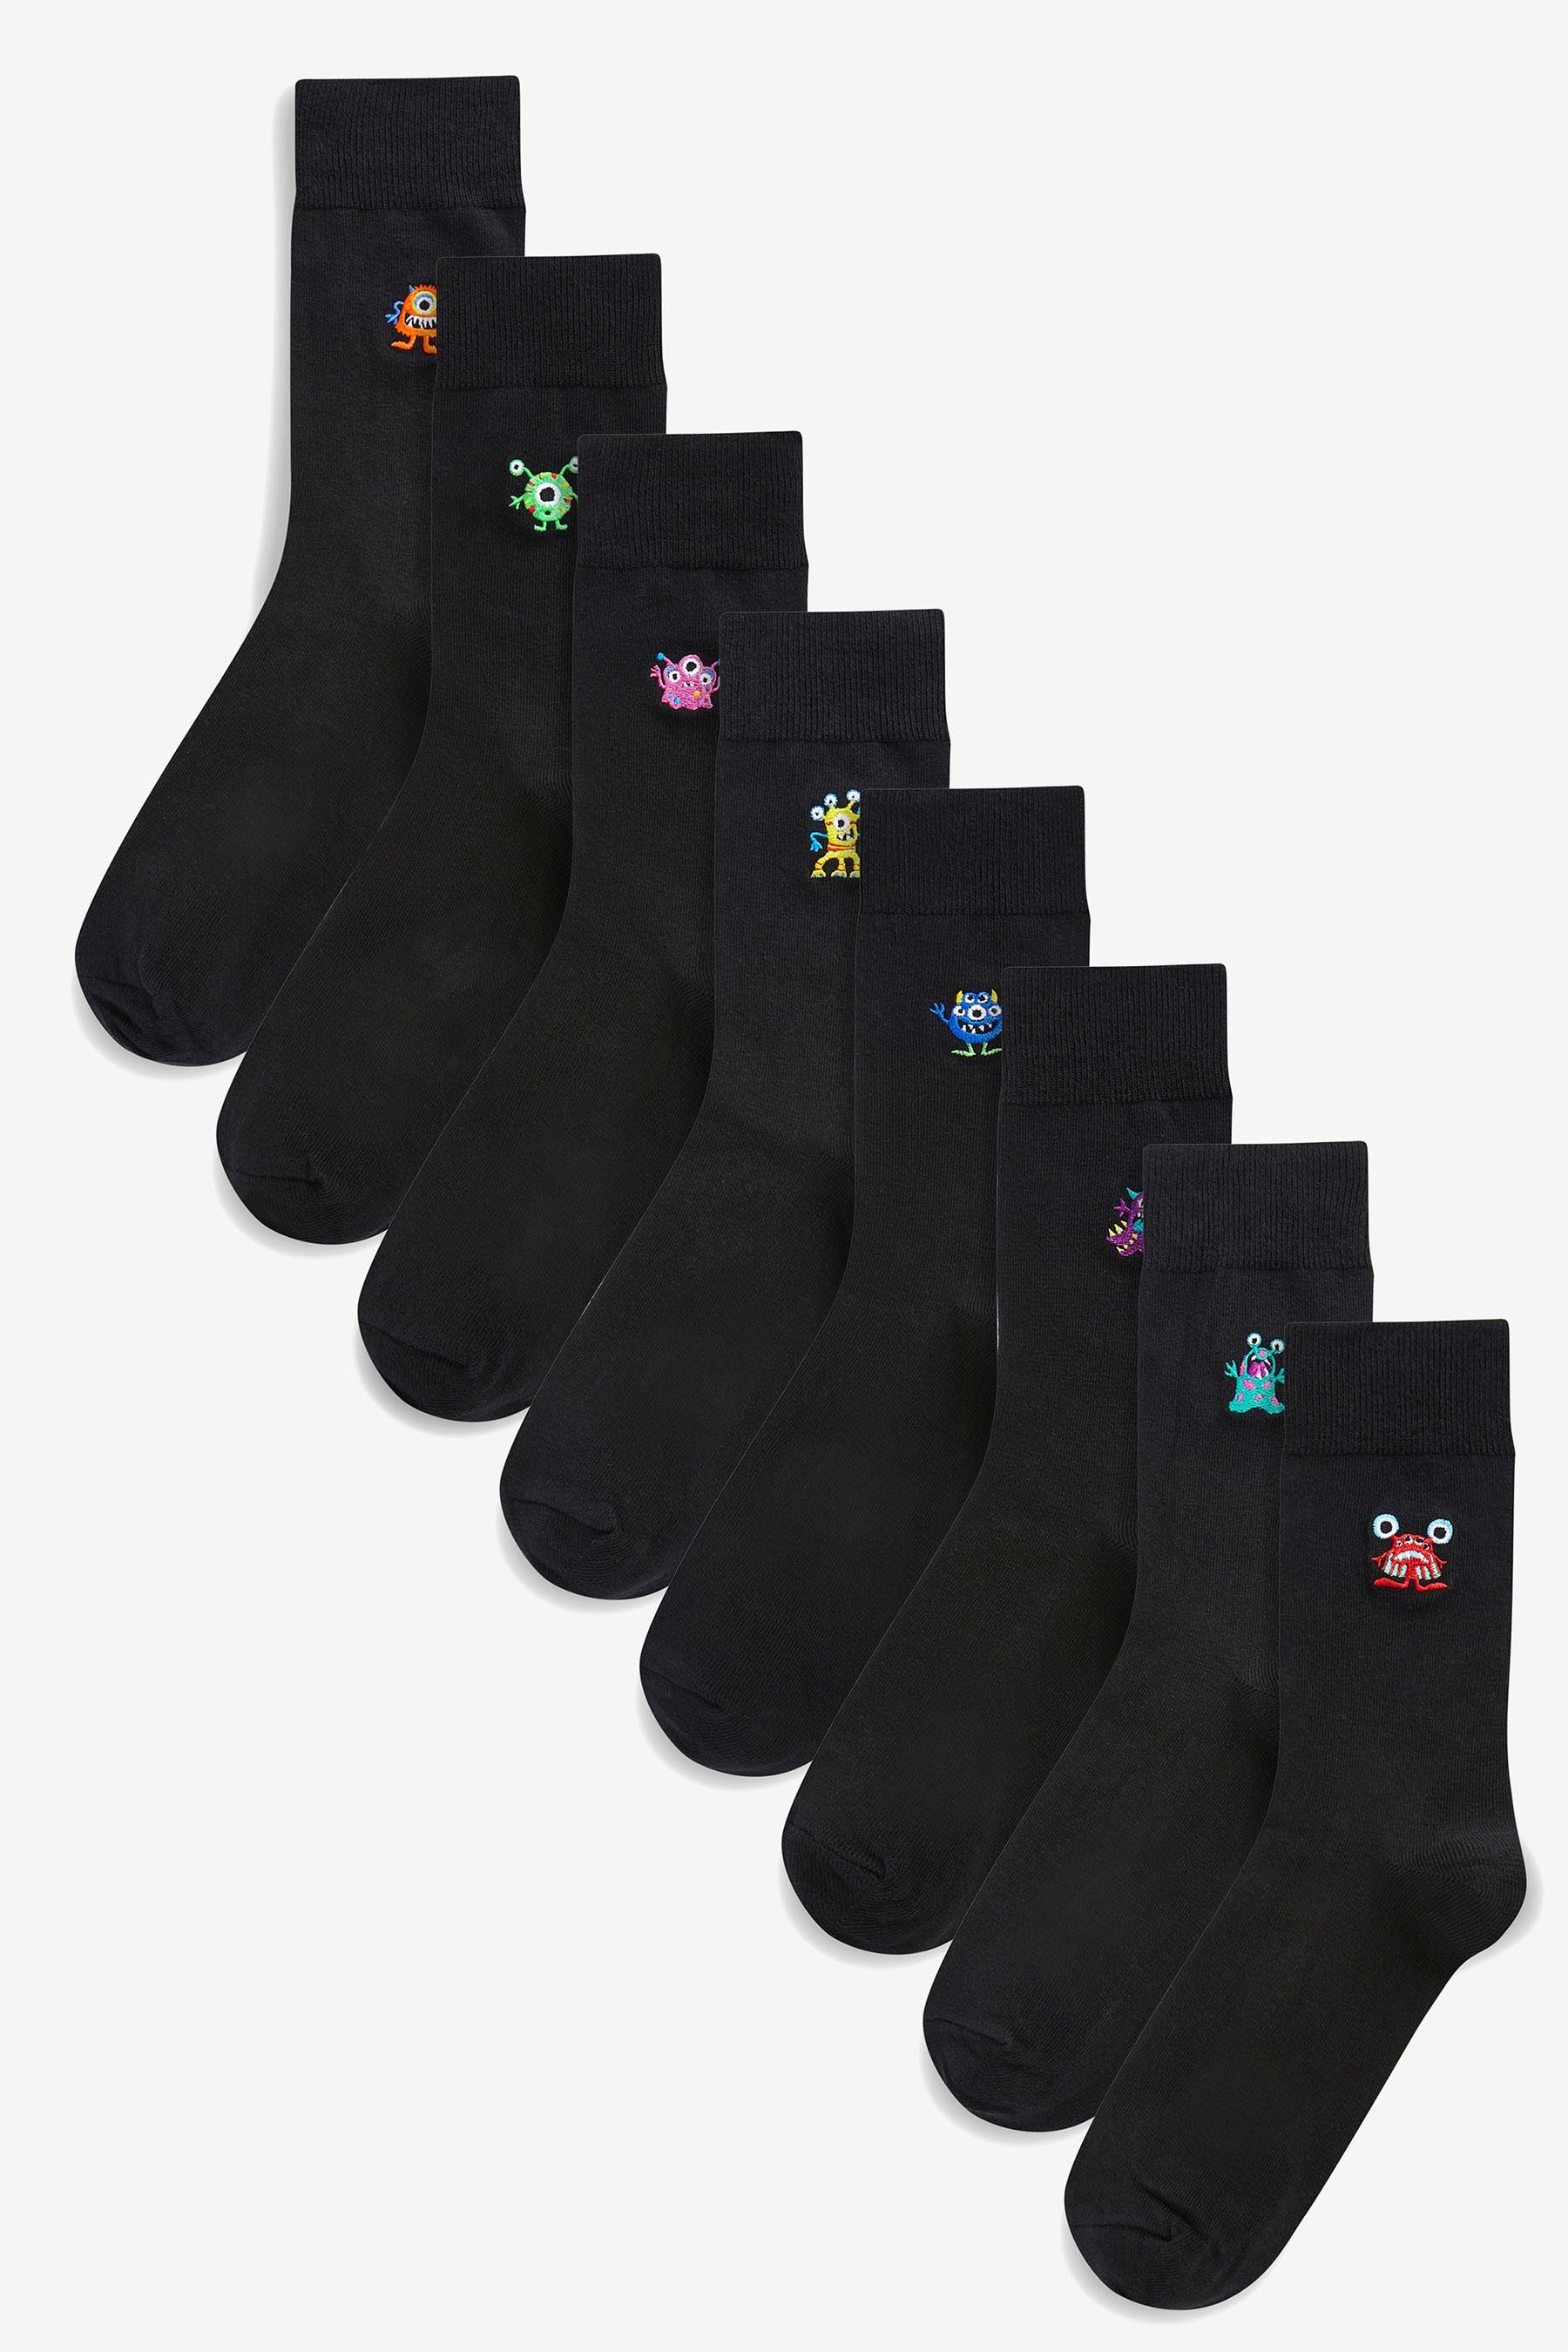 mit Kurzsocken (8-Paar) Monster Stickerei Black Socken Next Bright